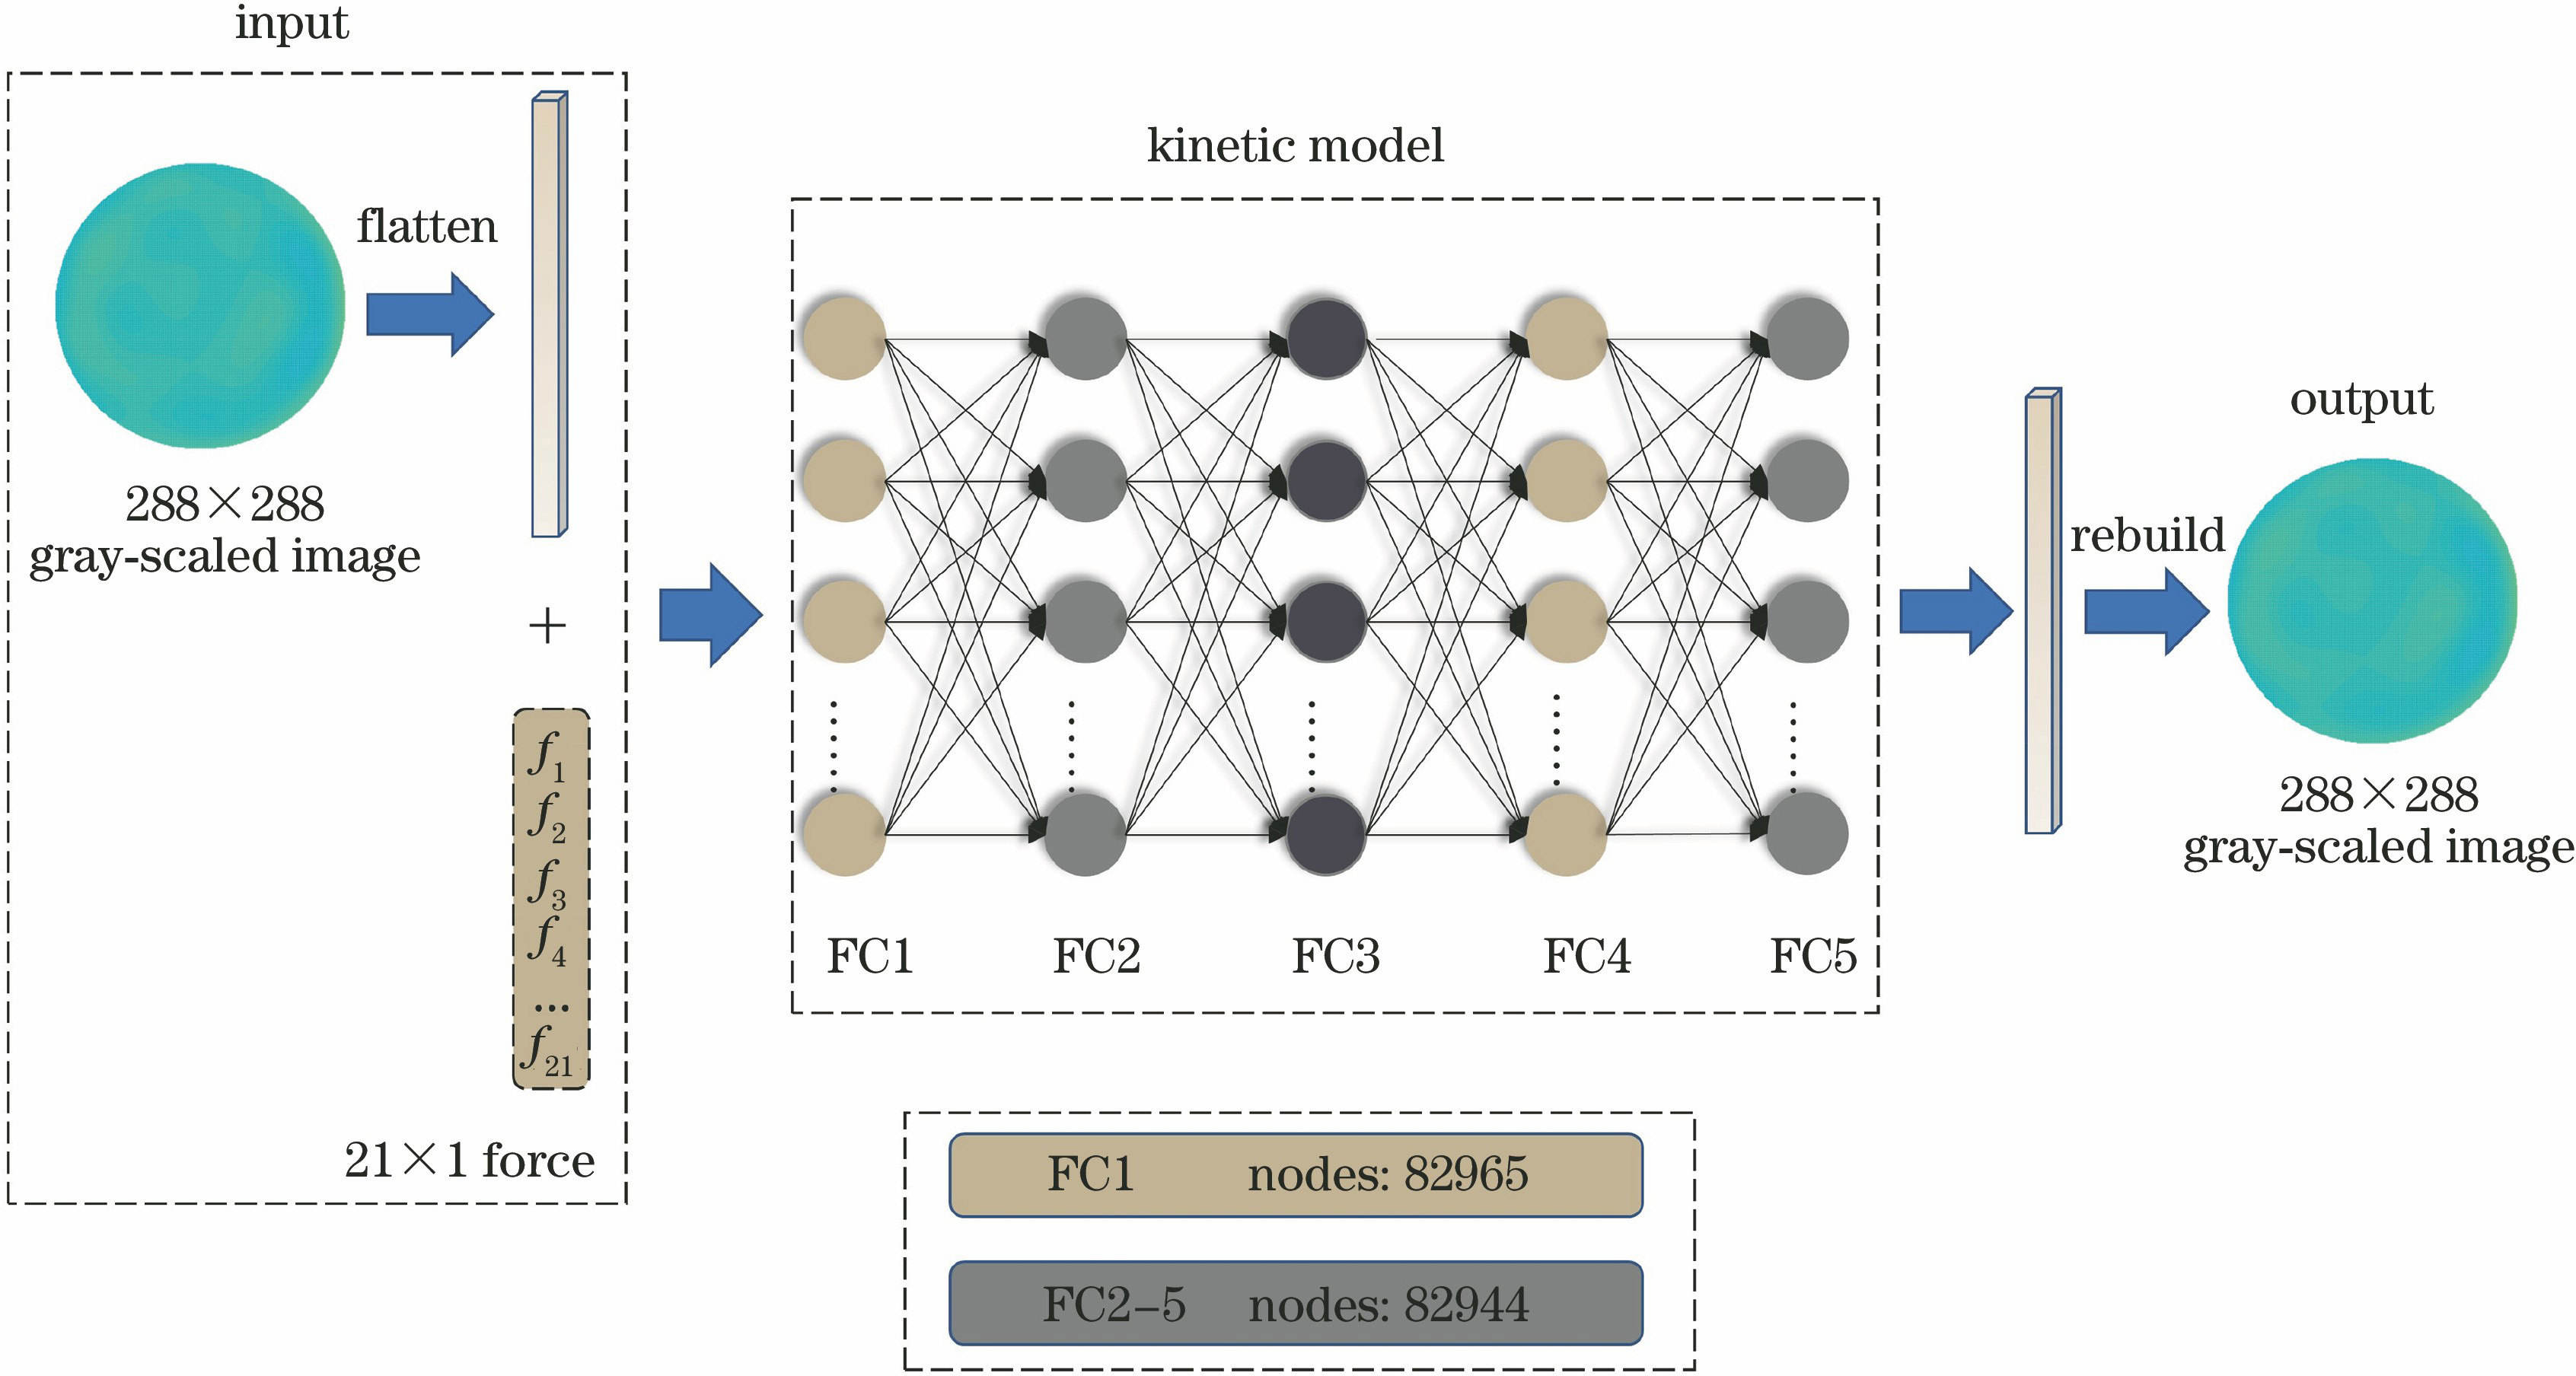 Framework and parameters of kinetic model